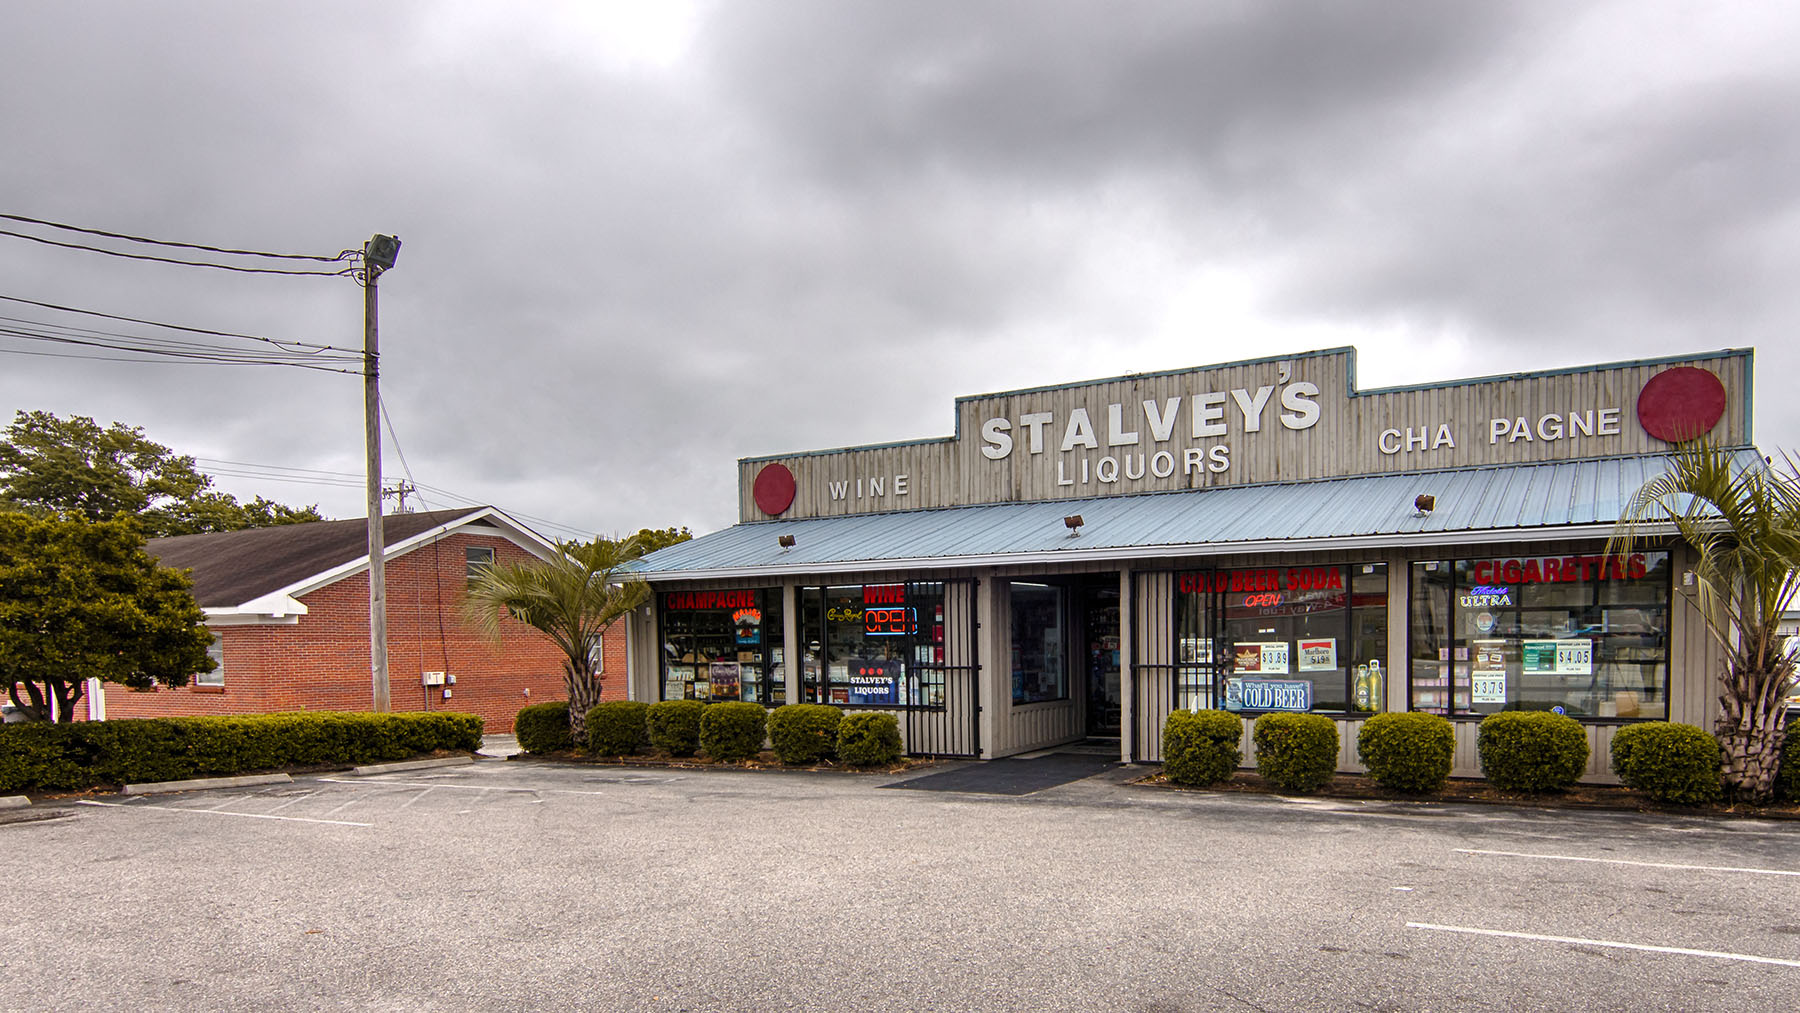 Stalvey's Liquor Store